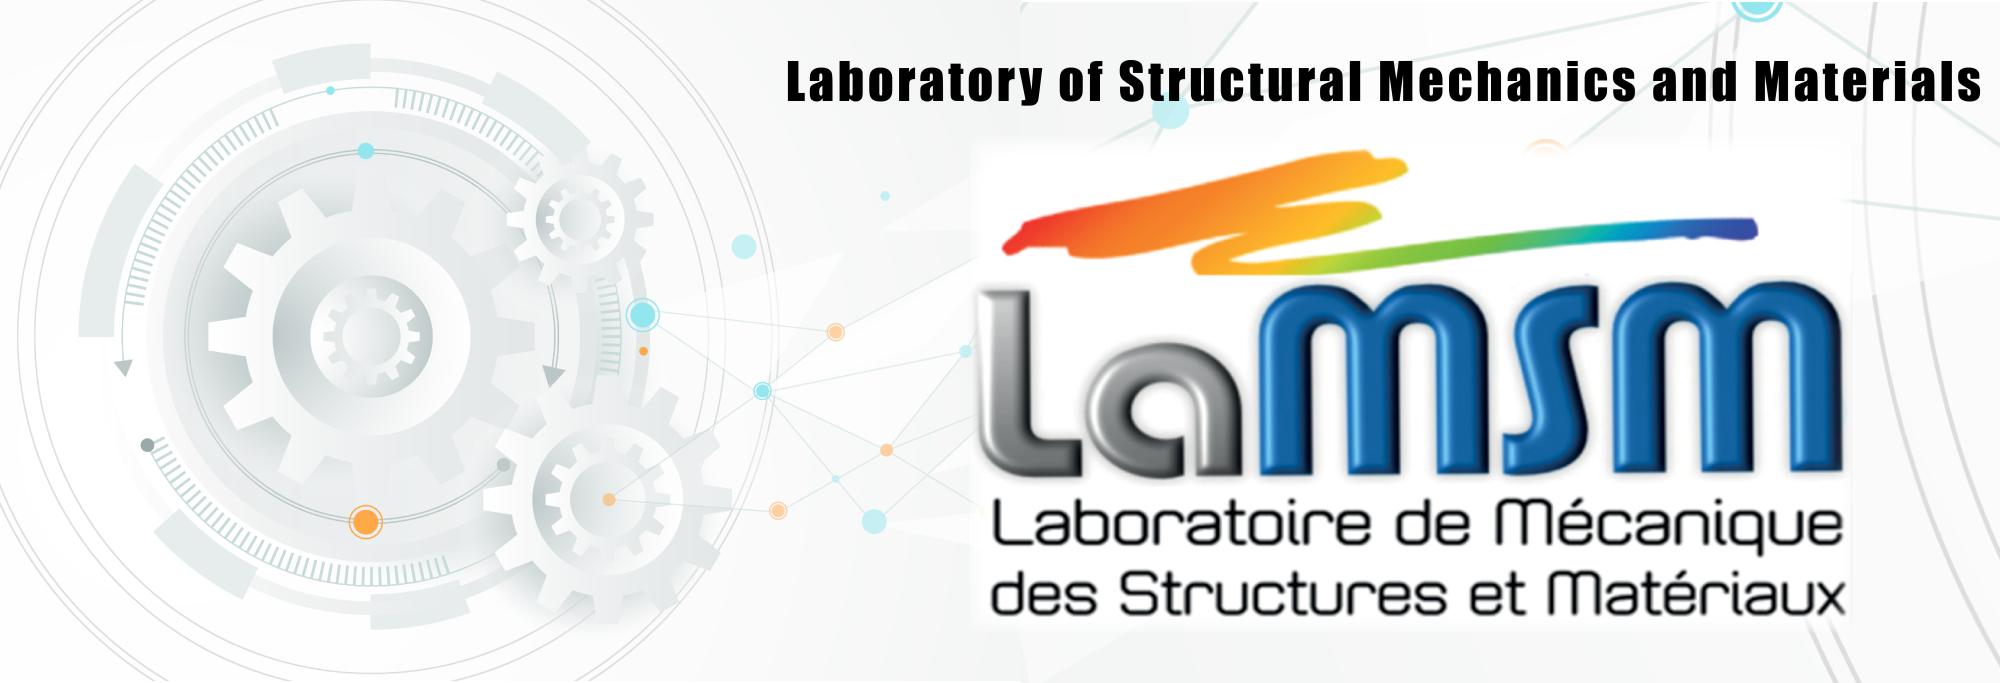 log-lab